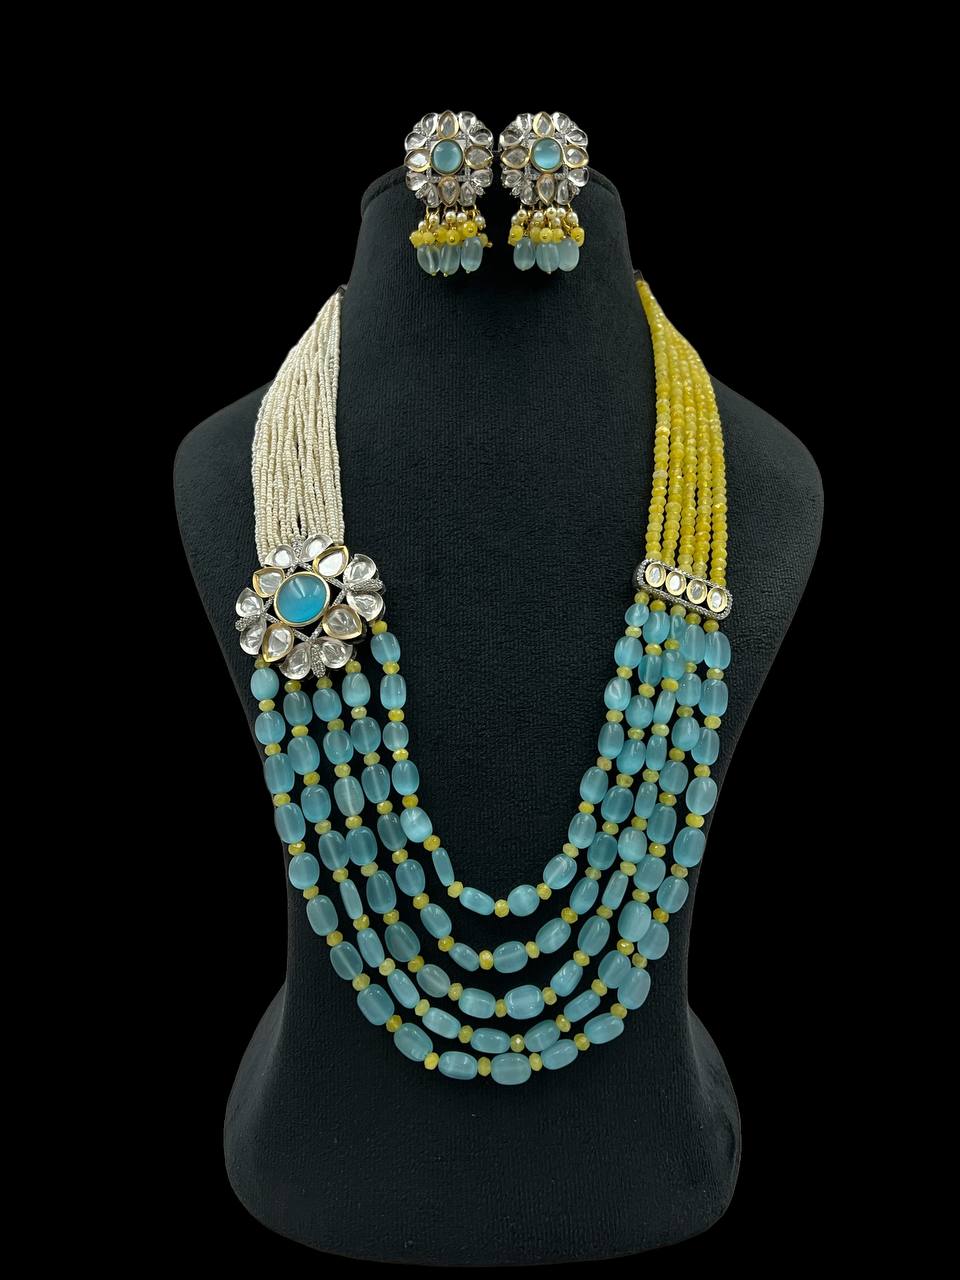 Fusion necklace | Designer jewelry | Monalisa necklace